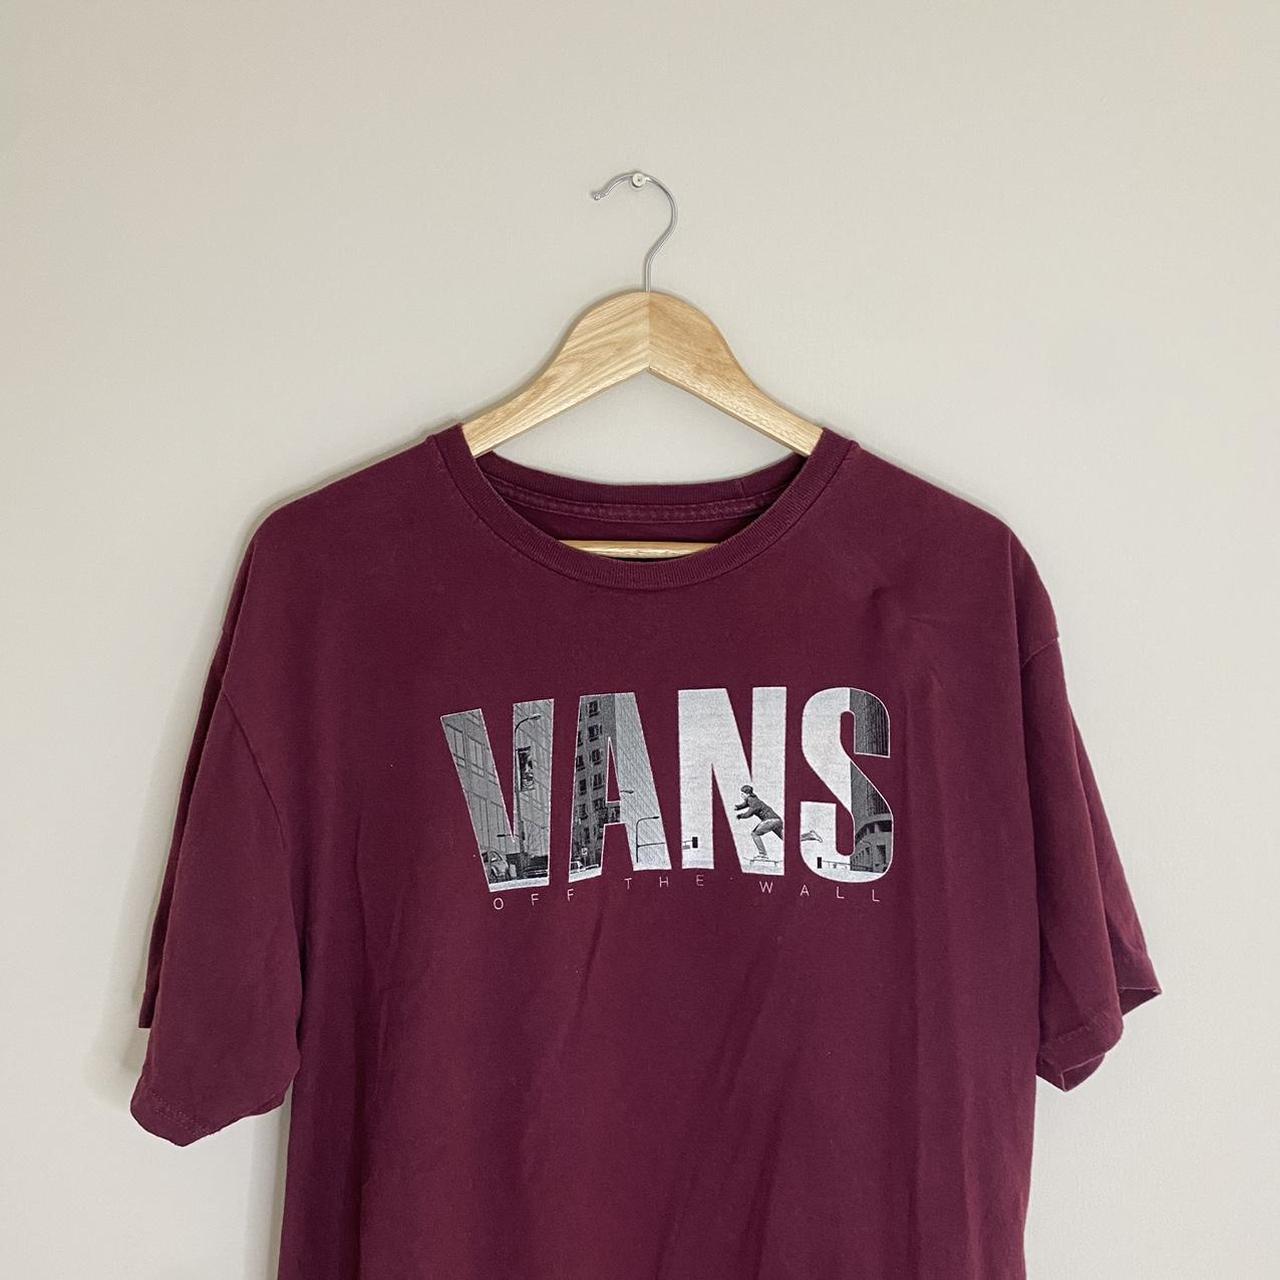 Vans T-shirt - Printed logo - Burgundy and grey... - Depop